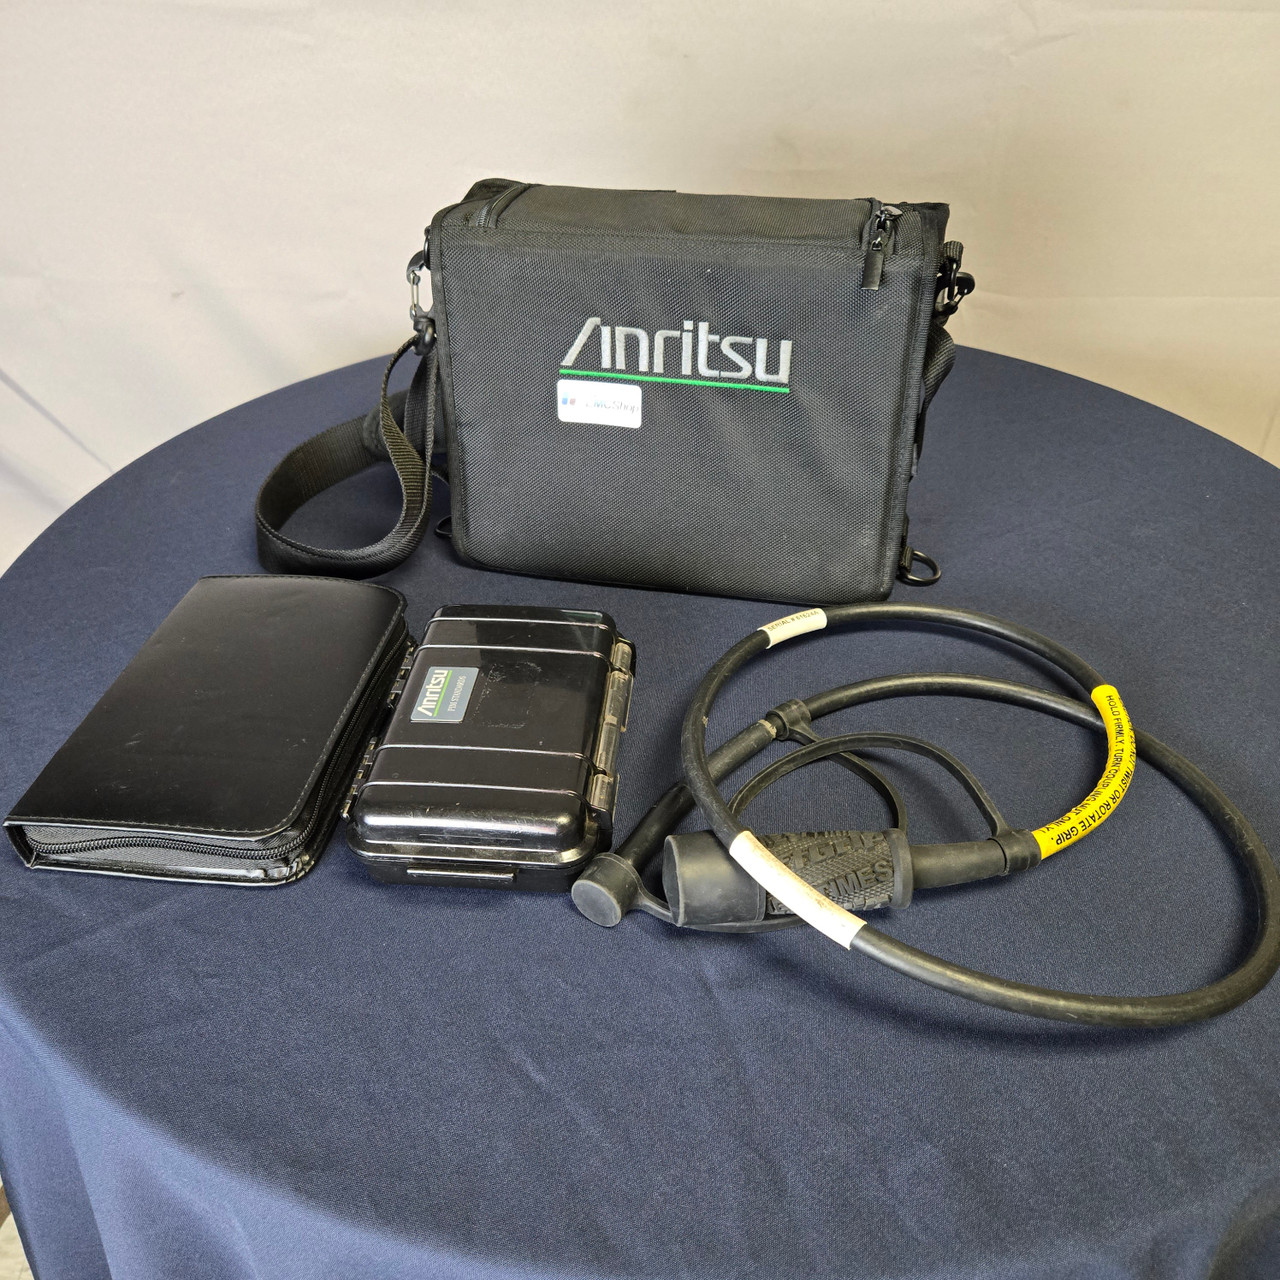 Anritsu MT8212E Handheld Cable, Antenna and Base Station Analyzer